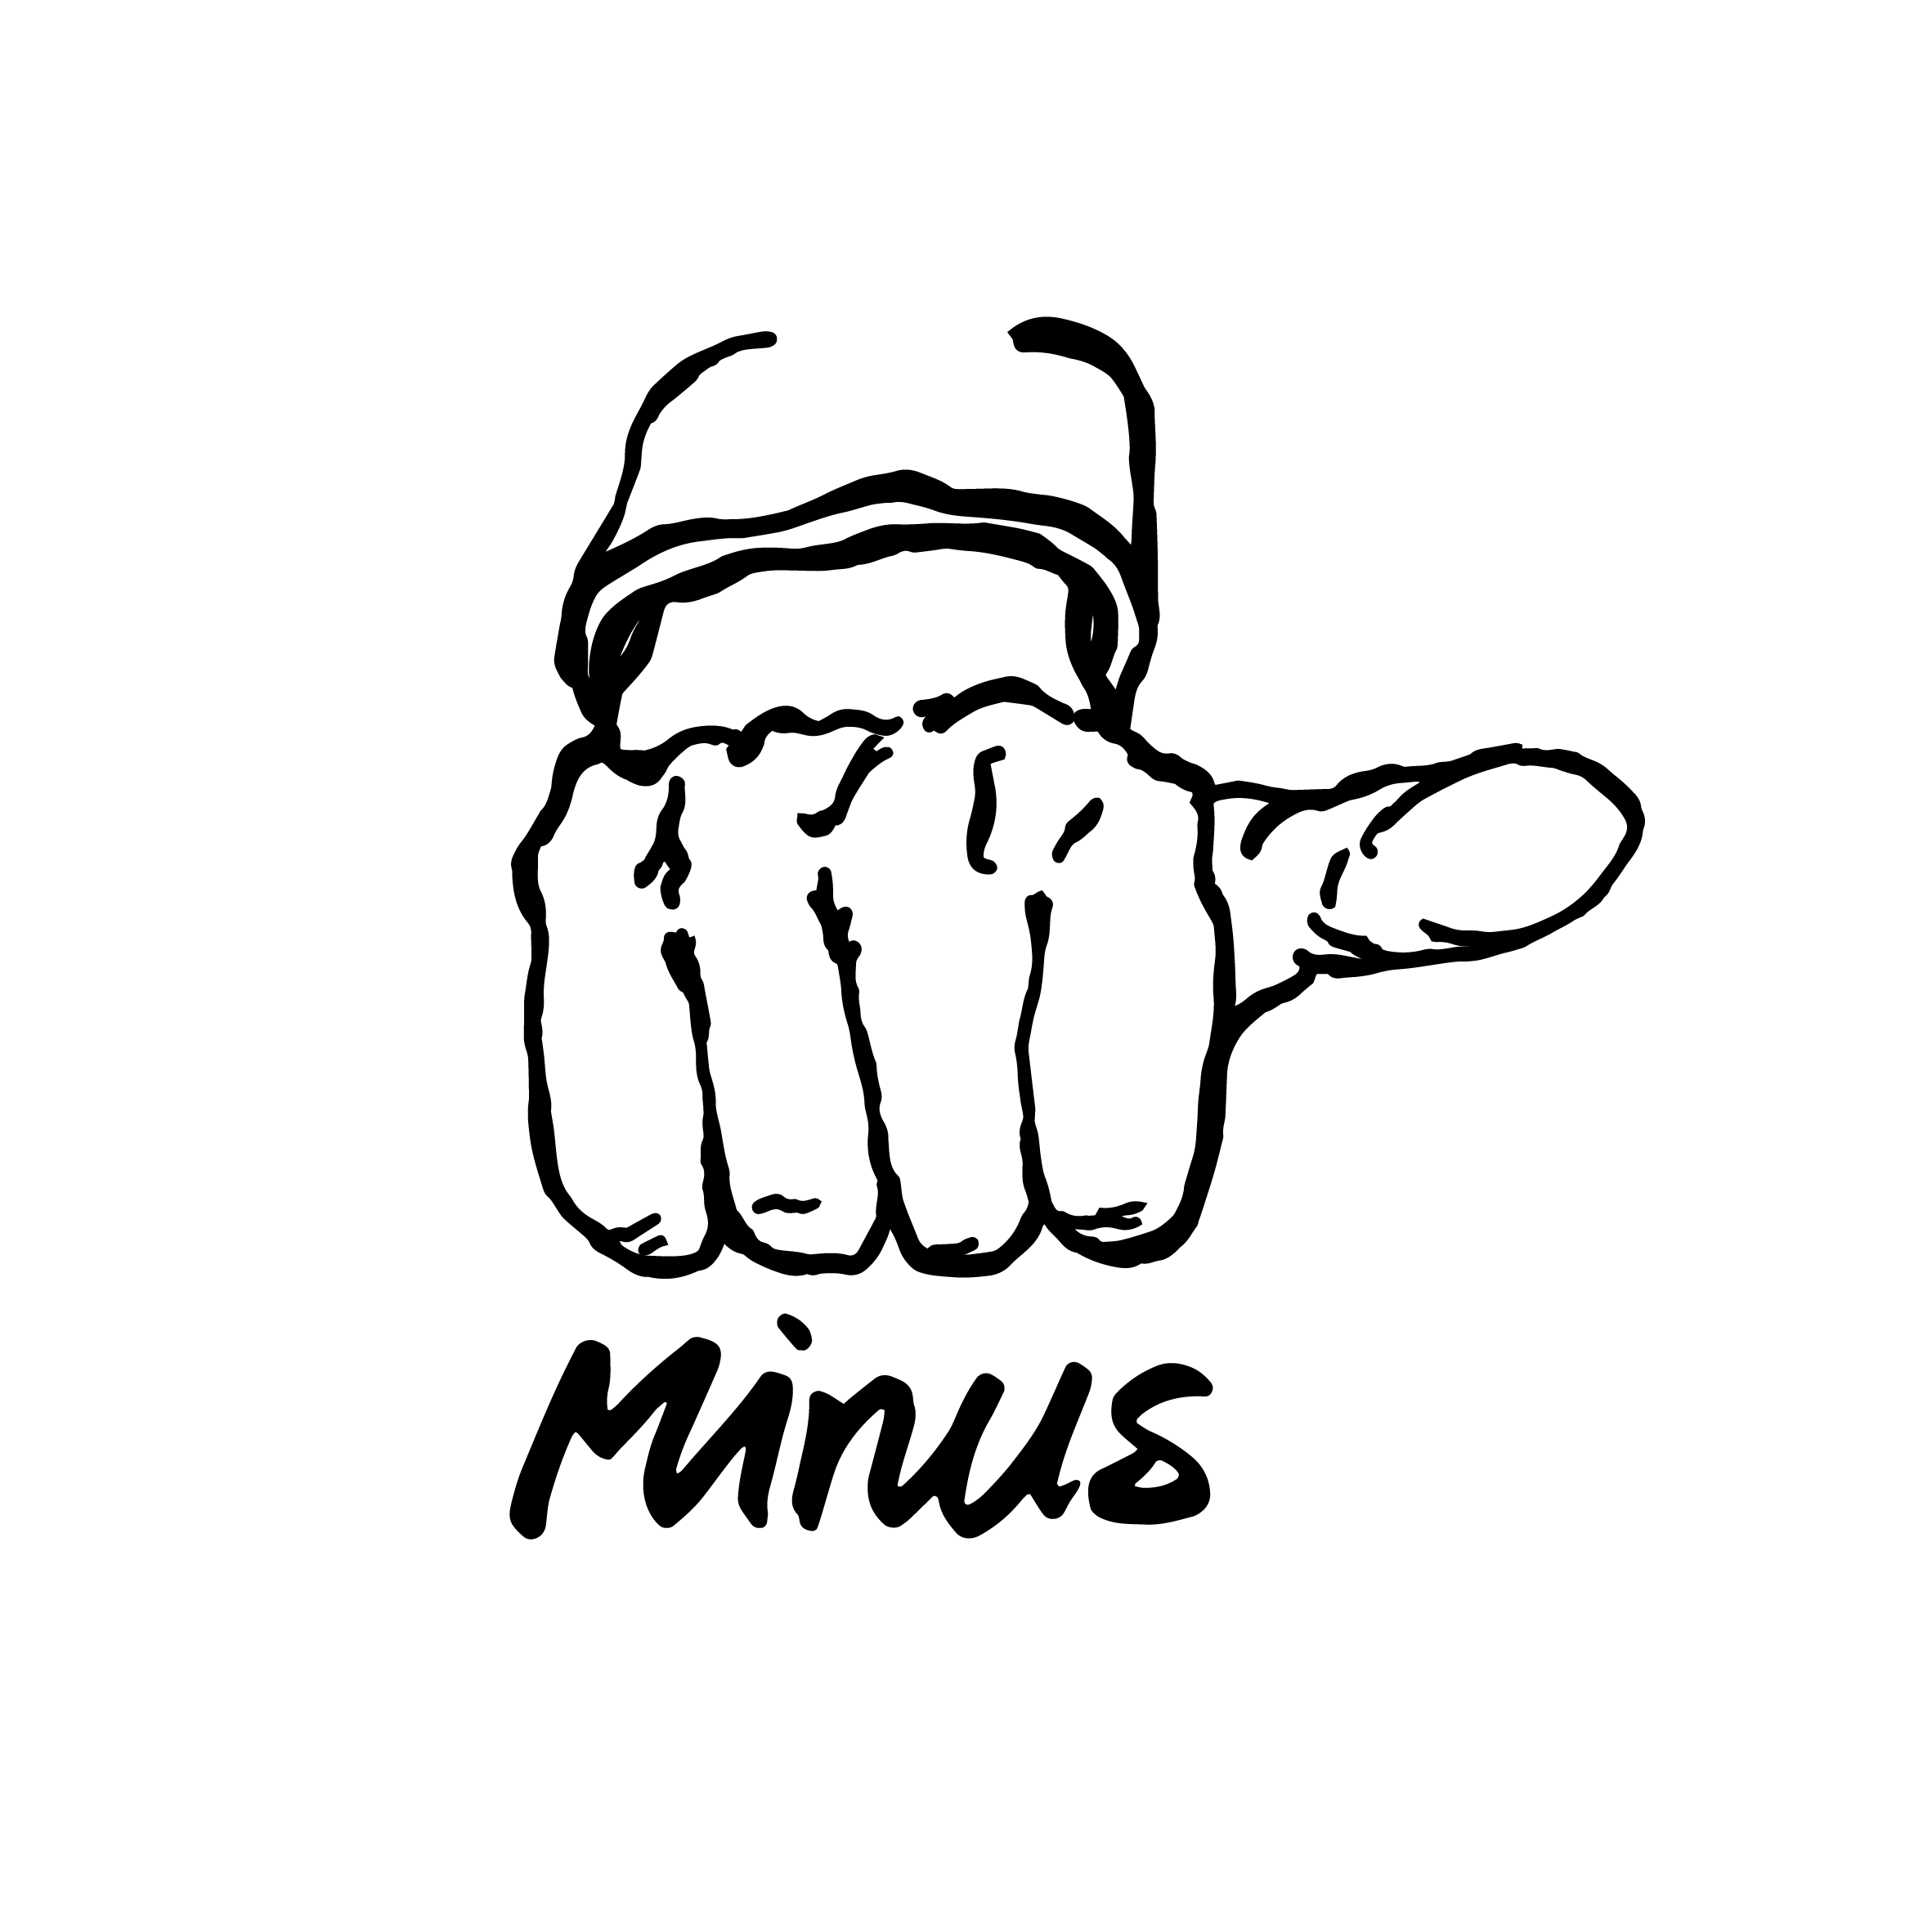 Minus_6